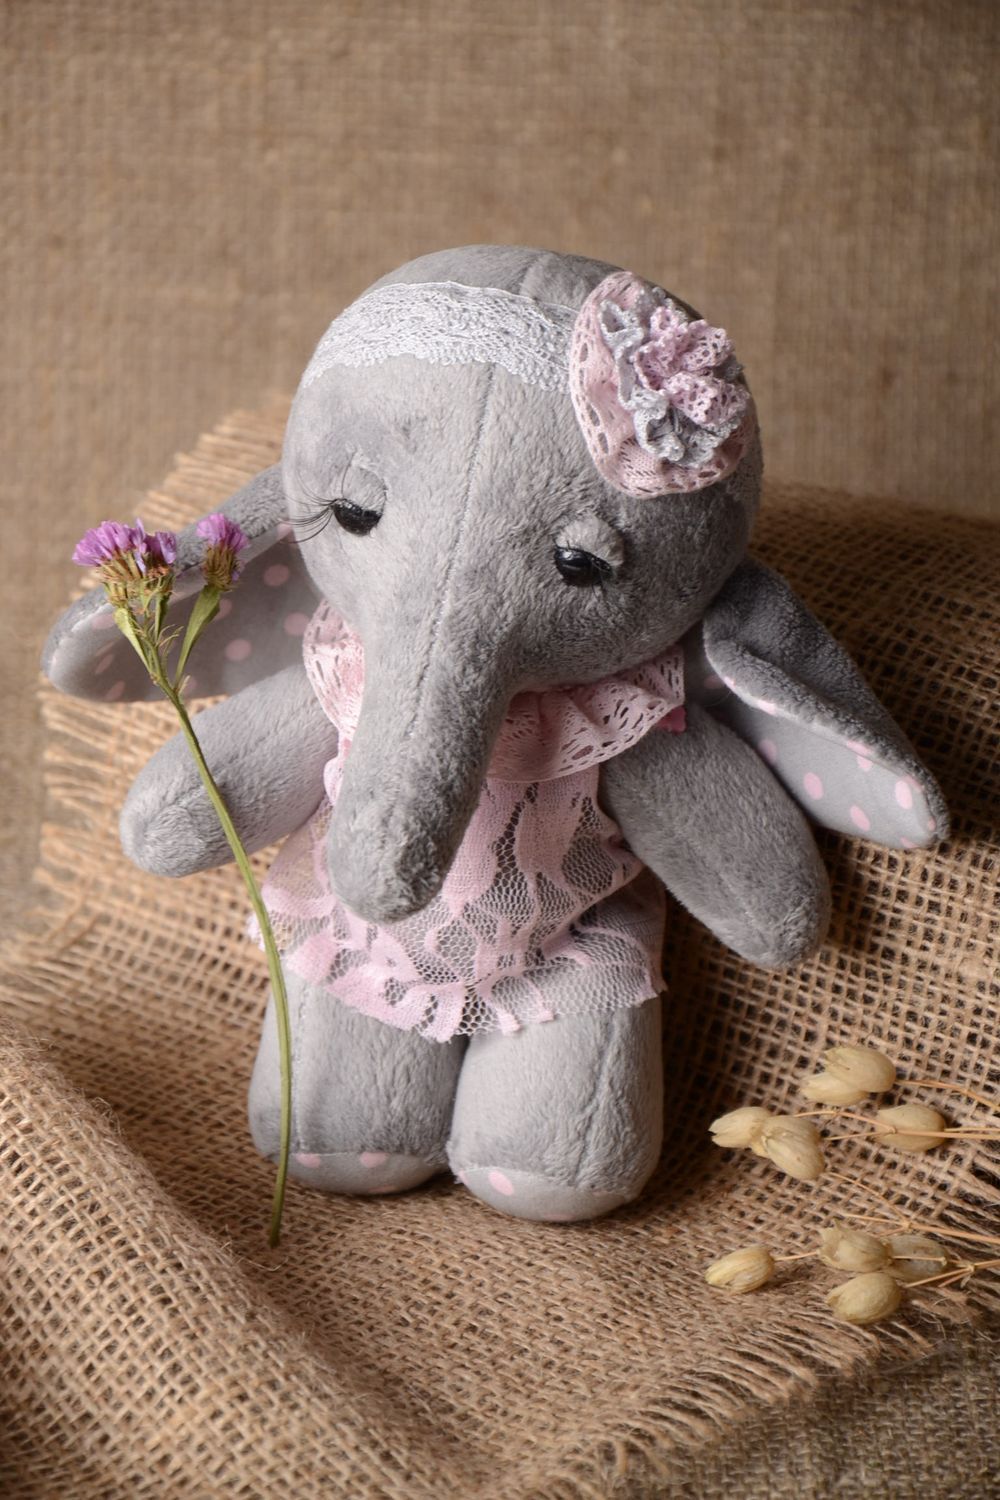 Handmade stuffed toy elephant soft doll for babies interior decor ideas photo 1